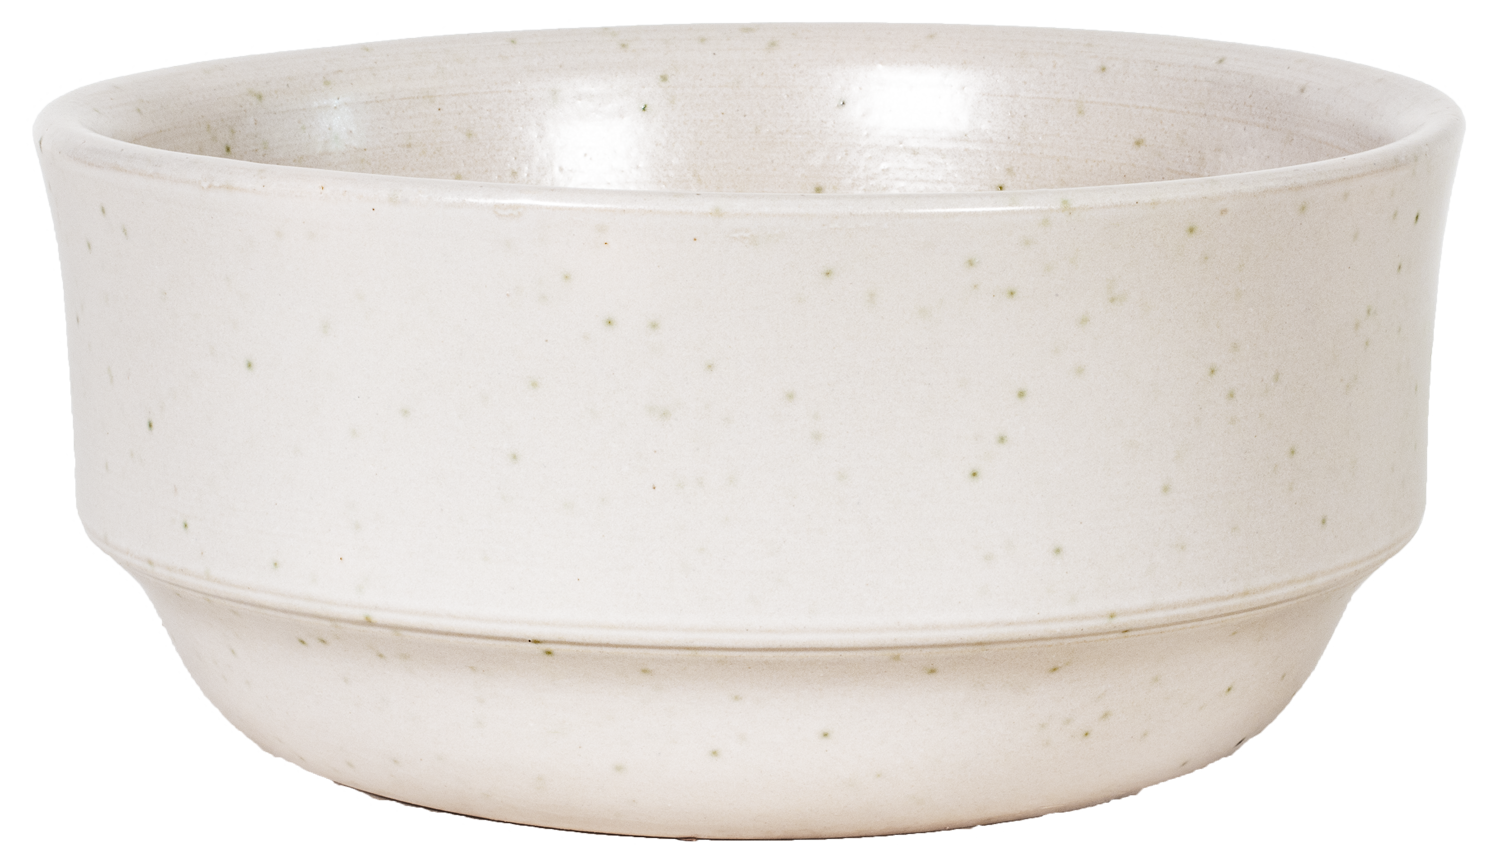 Large rounded bowl planter in white glaze